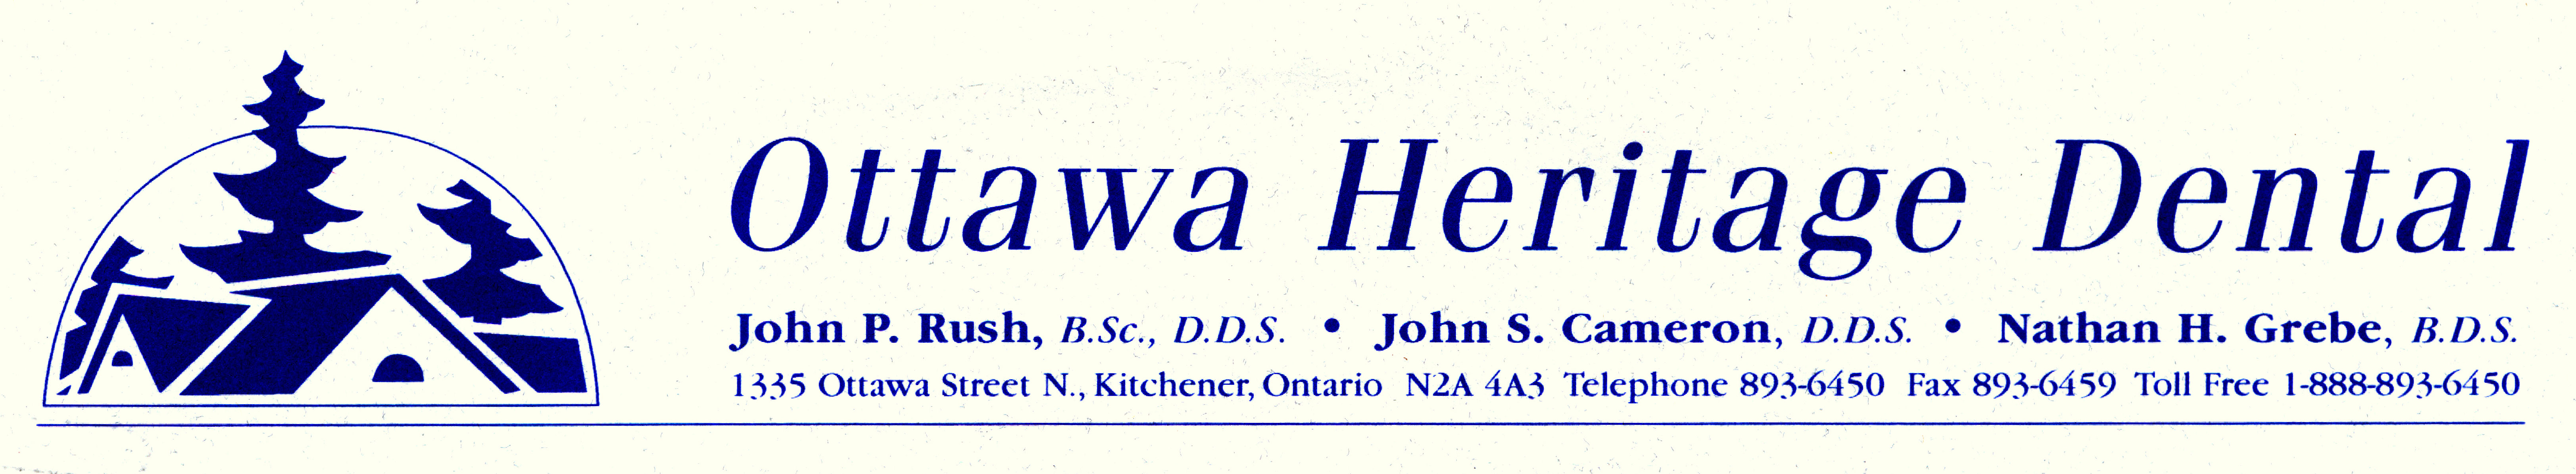 Ottawa Heritage Dental